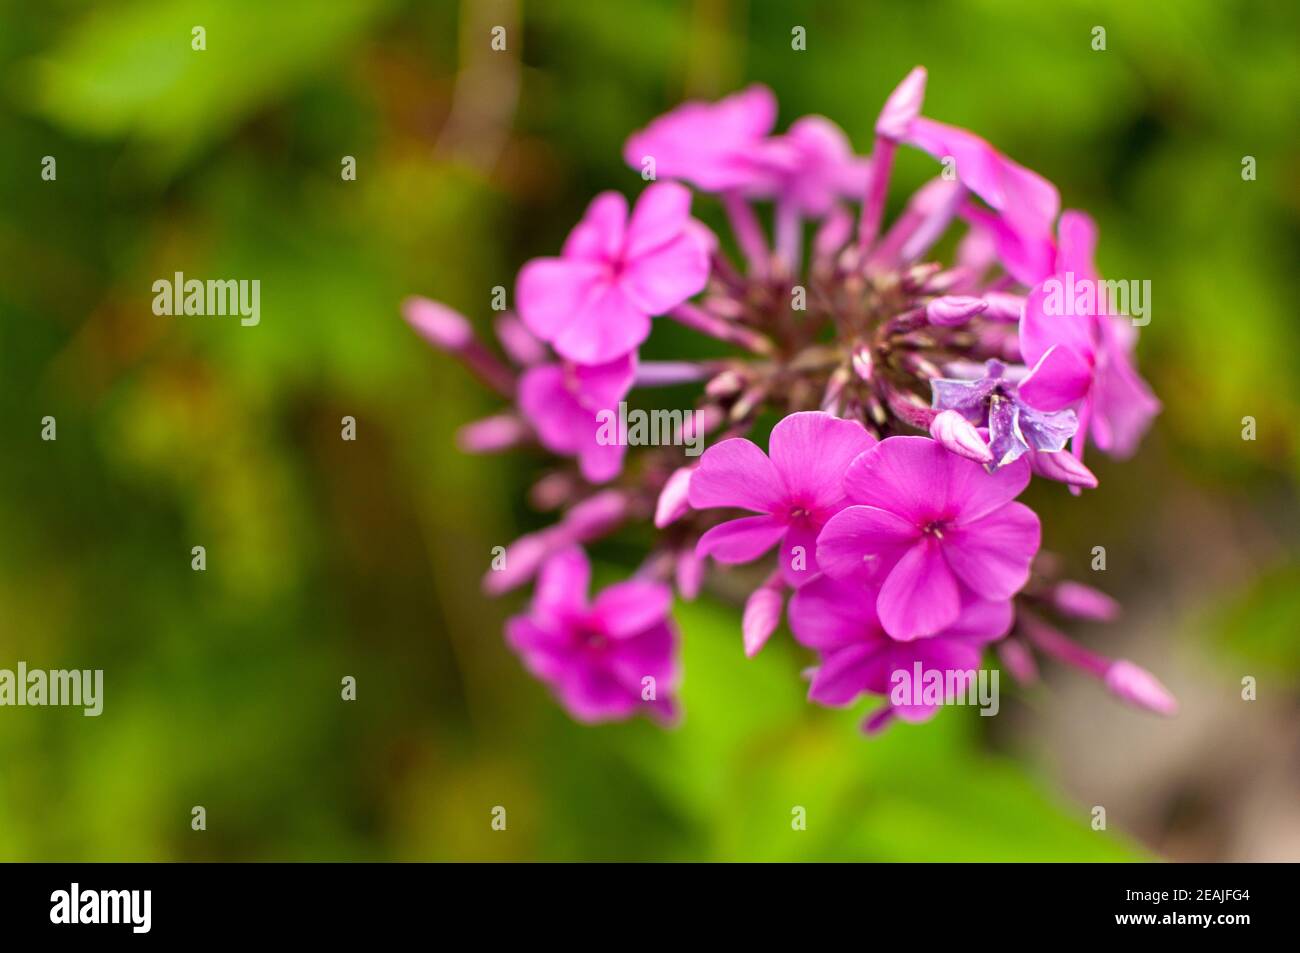 Pink Garden Phlox flower. Stock Photo